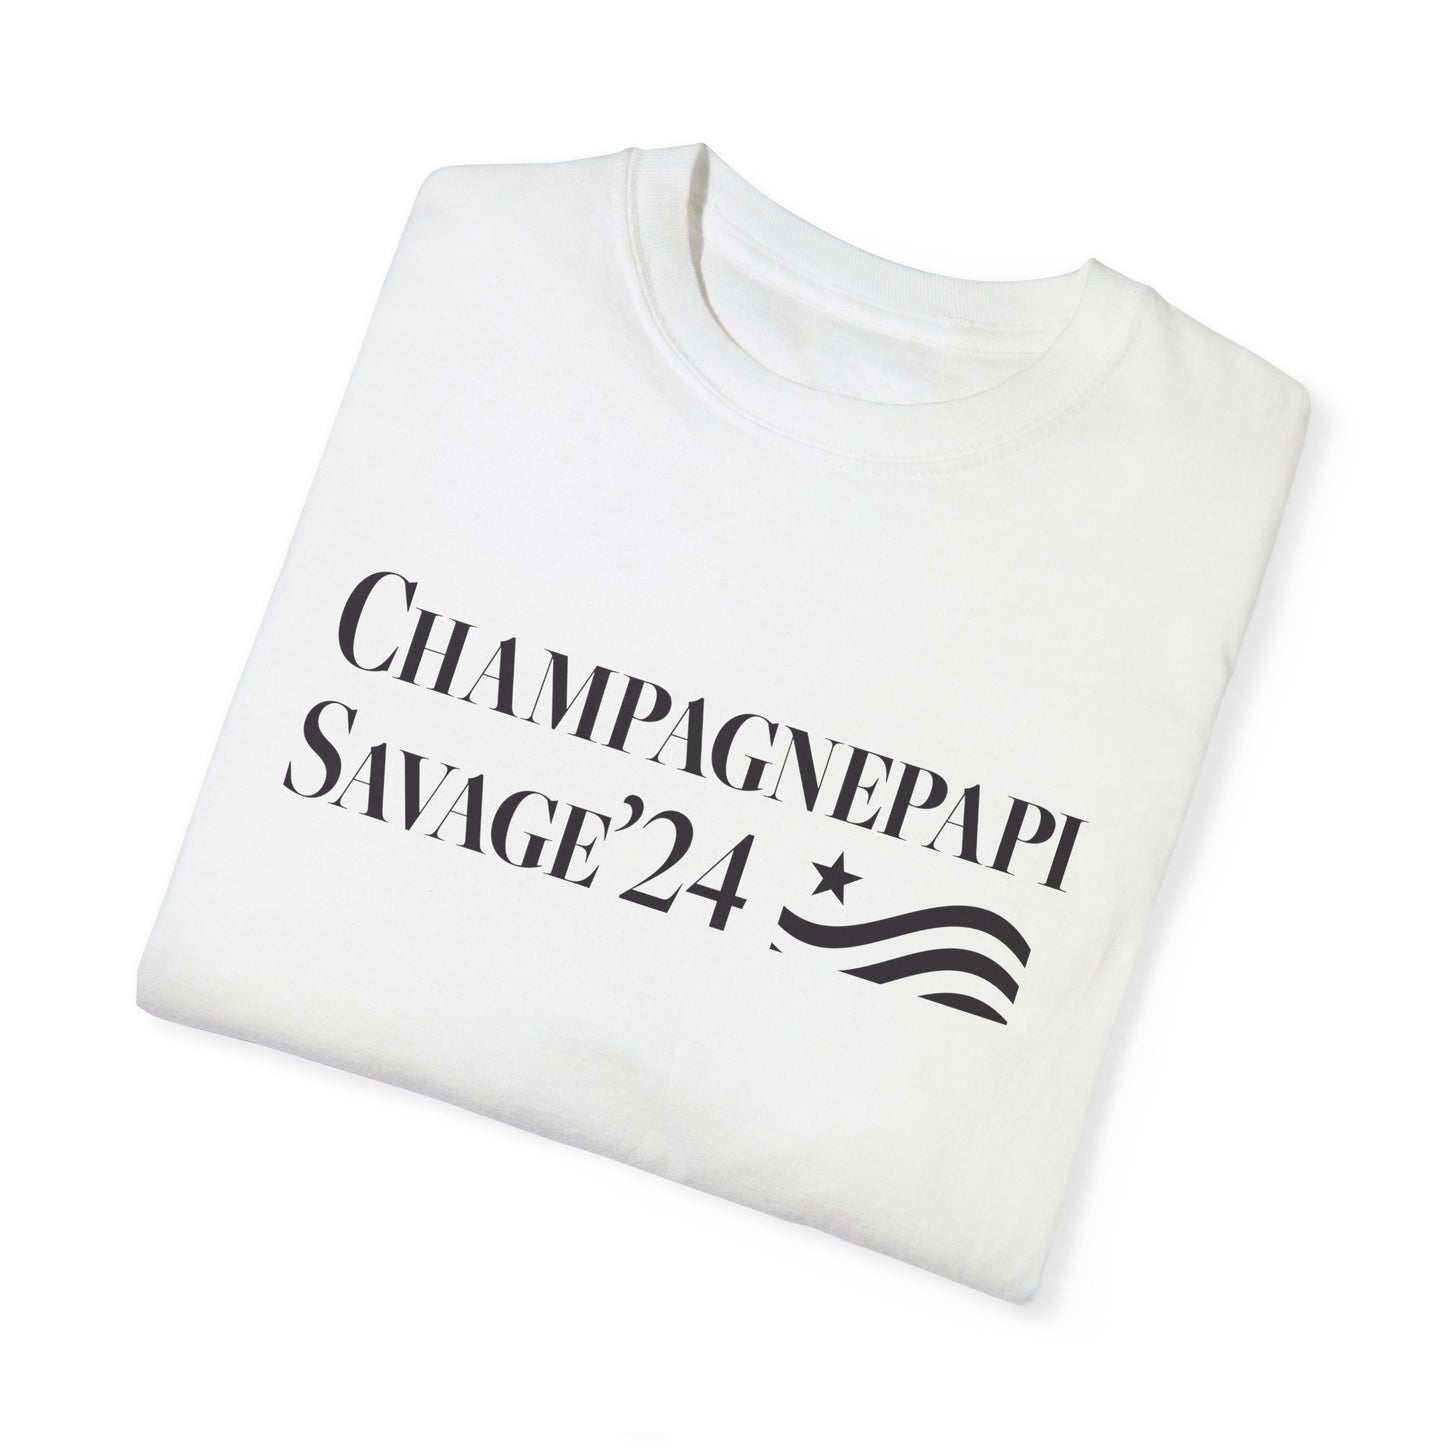 Champagnepapi - Savage '24 T- Shirt